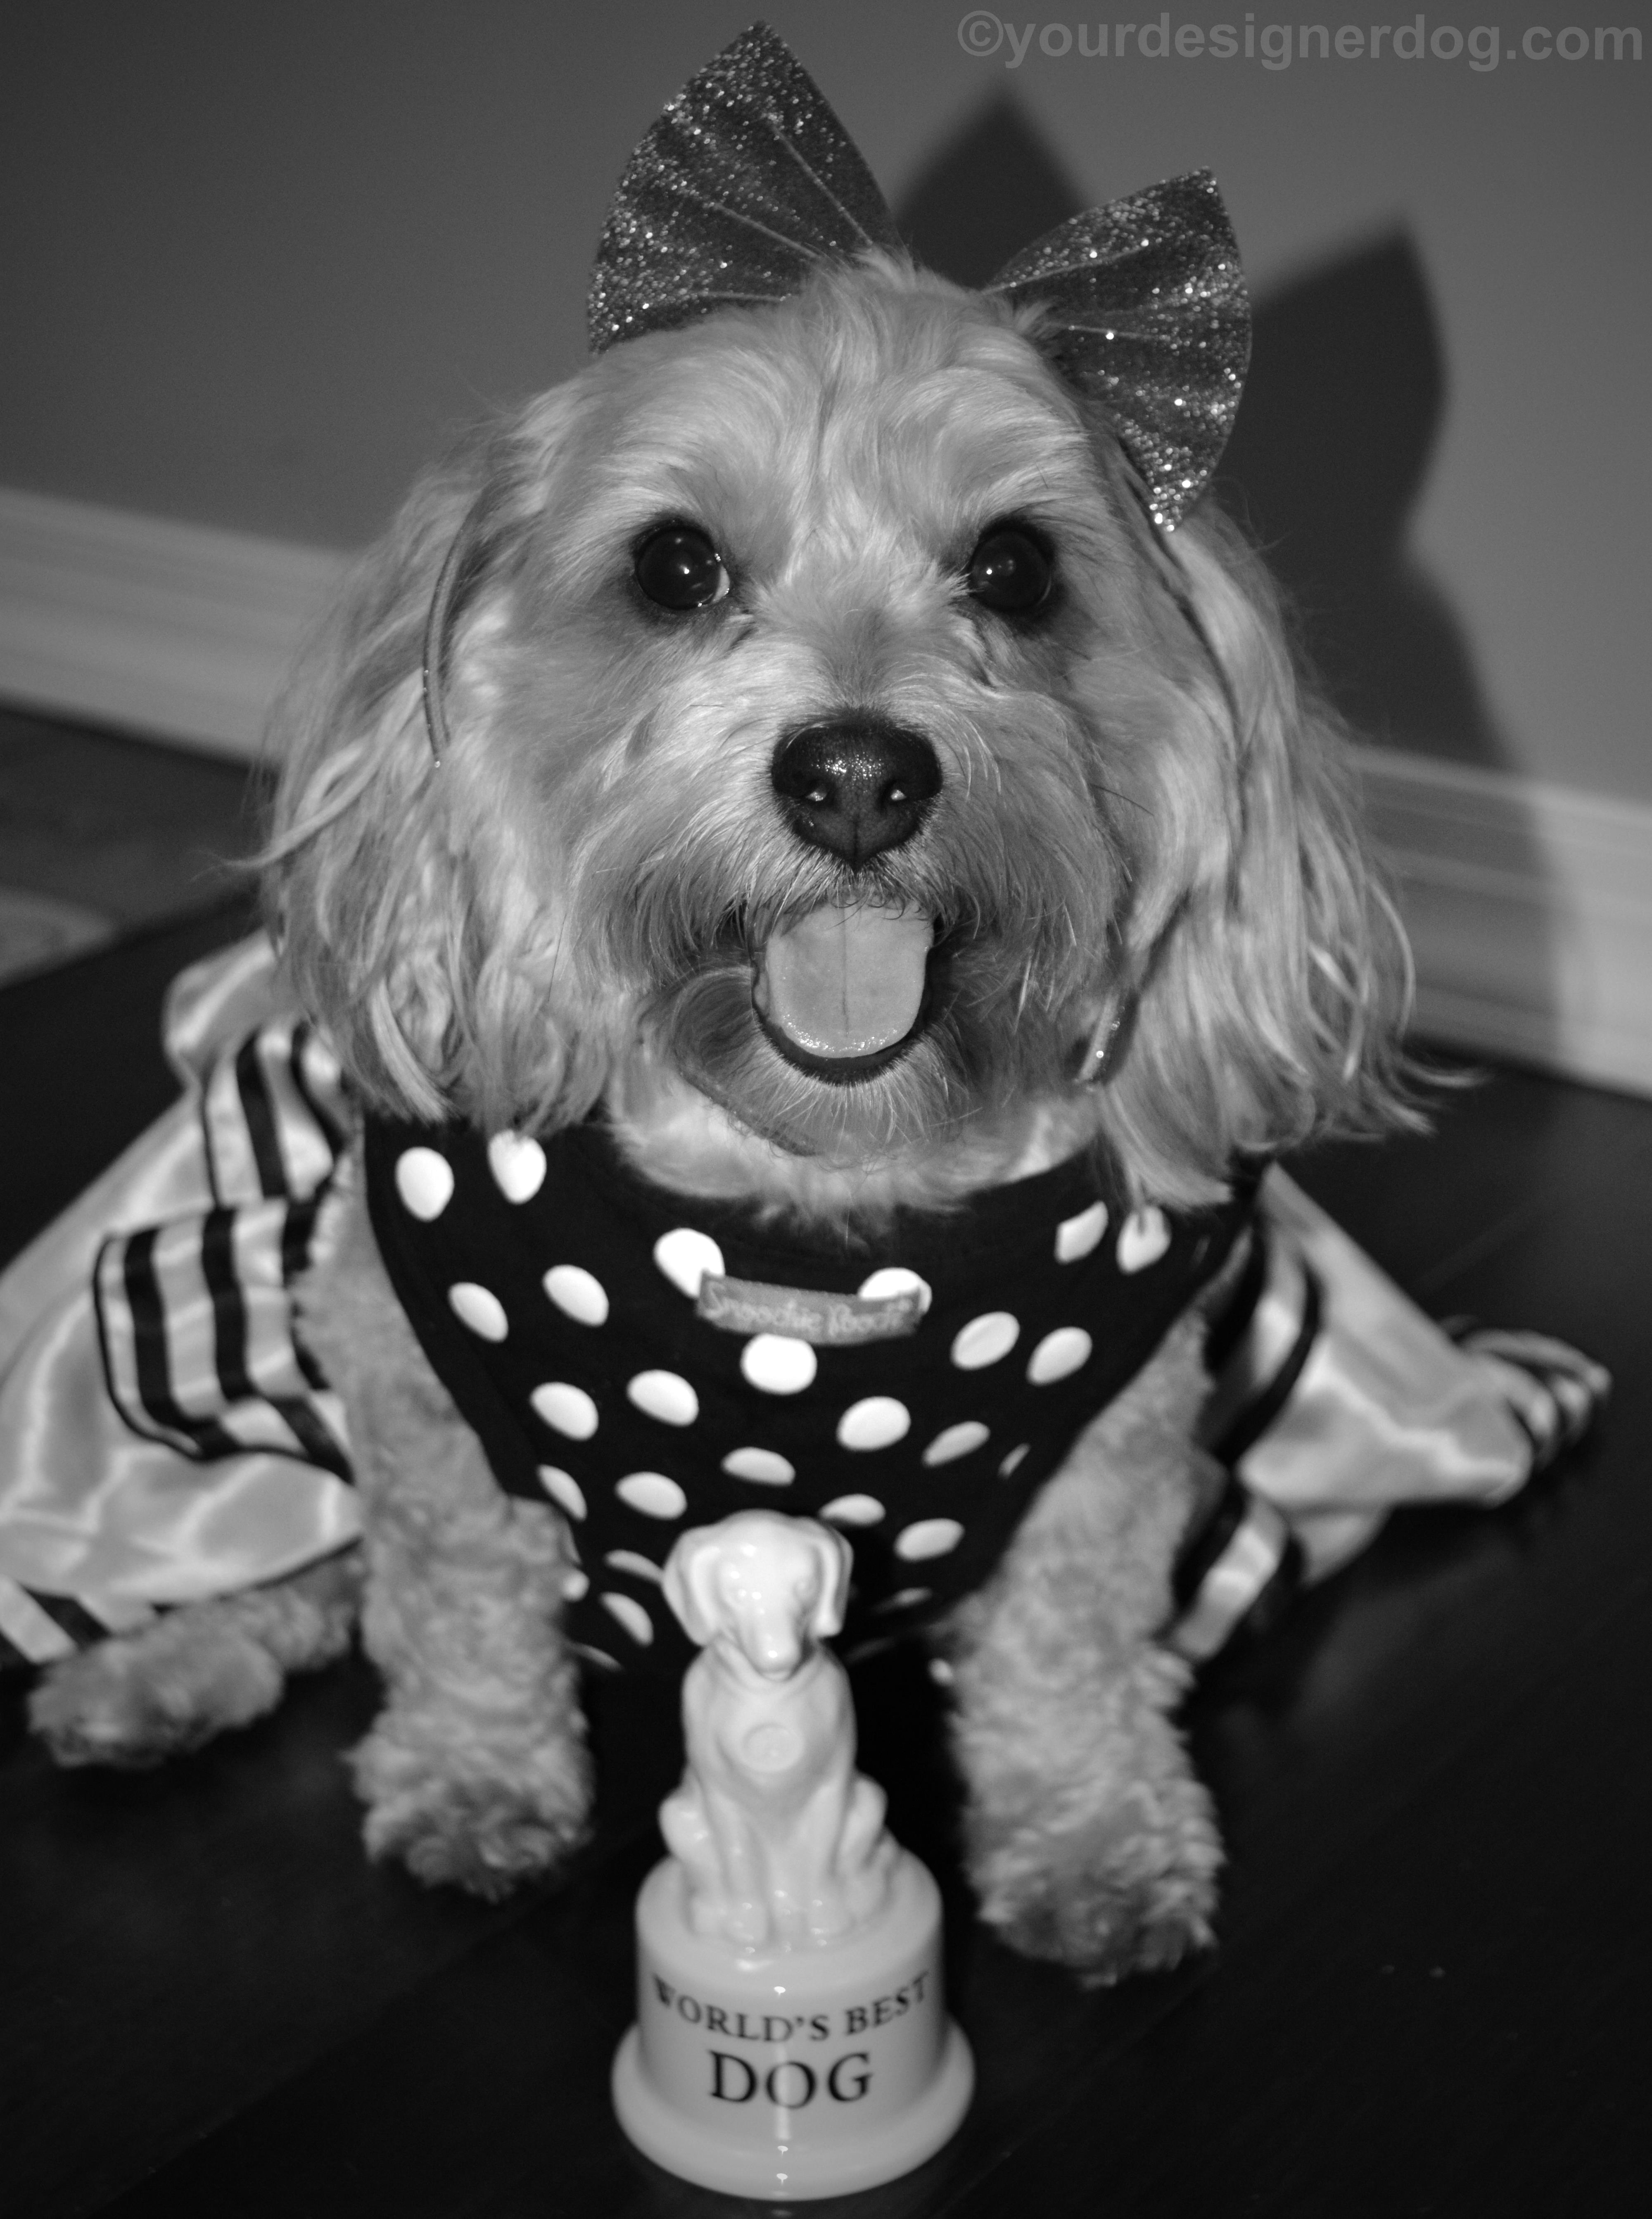 dogs, designer dogs, yorkipoo, yorkie poo, oscars, dog award, black and white photography, black and white dog dress